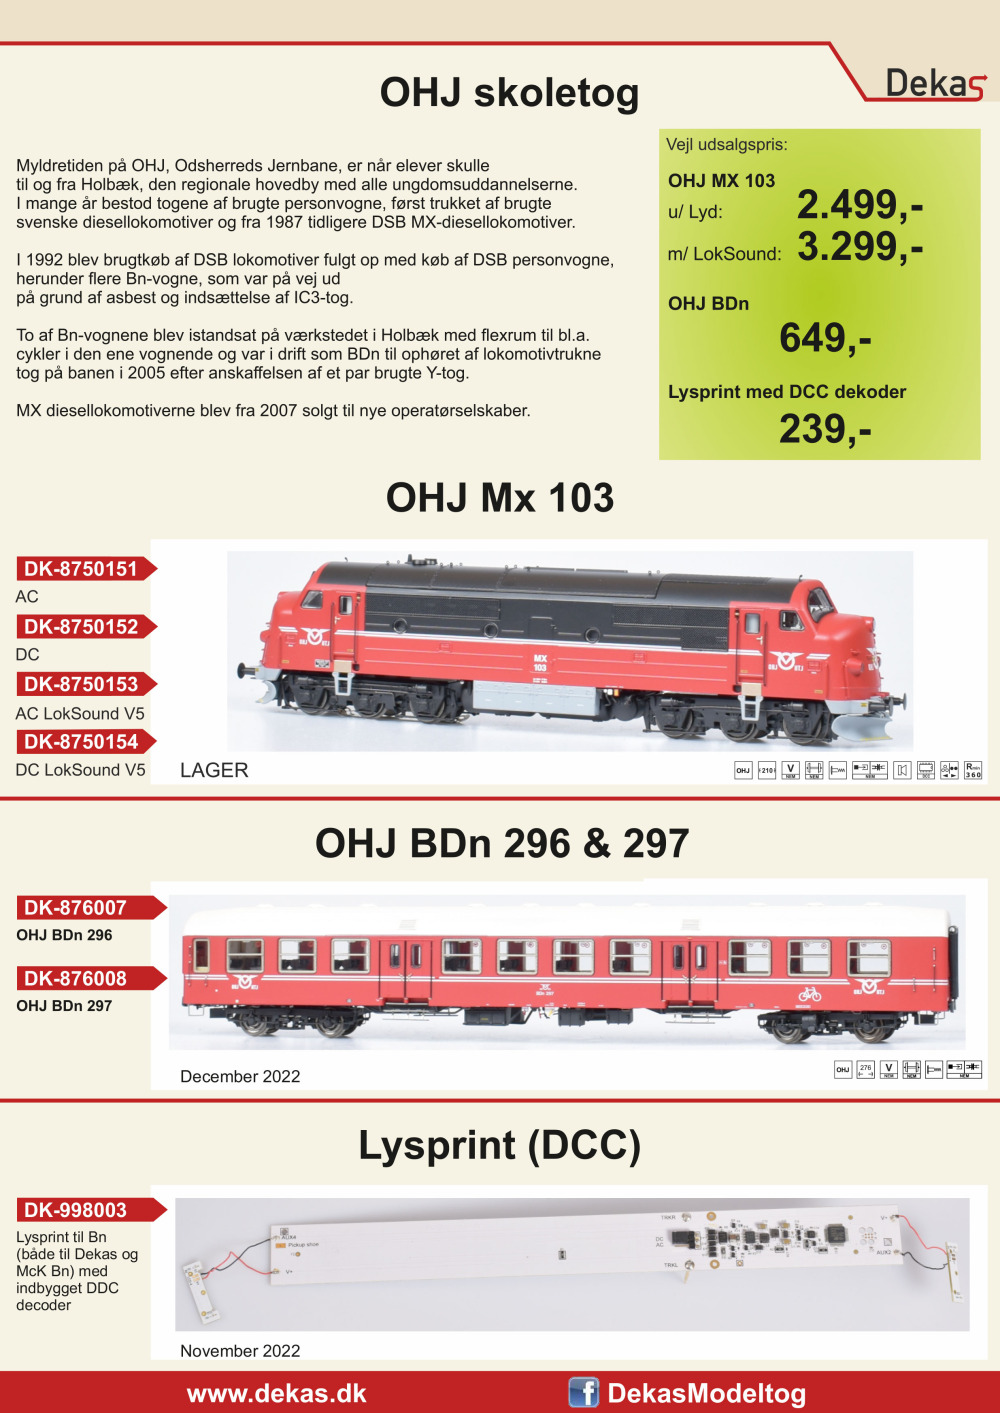 Dekas - OHJ - "School" train